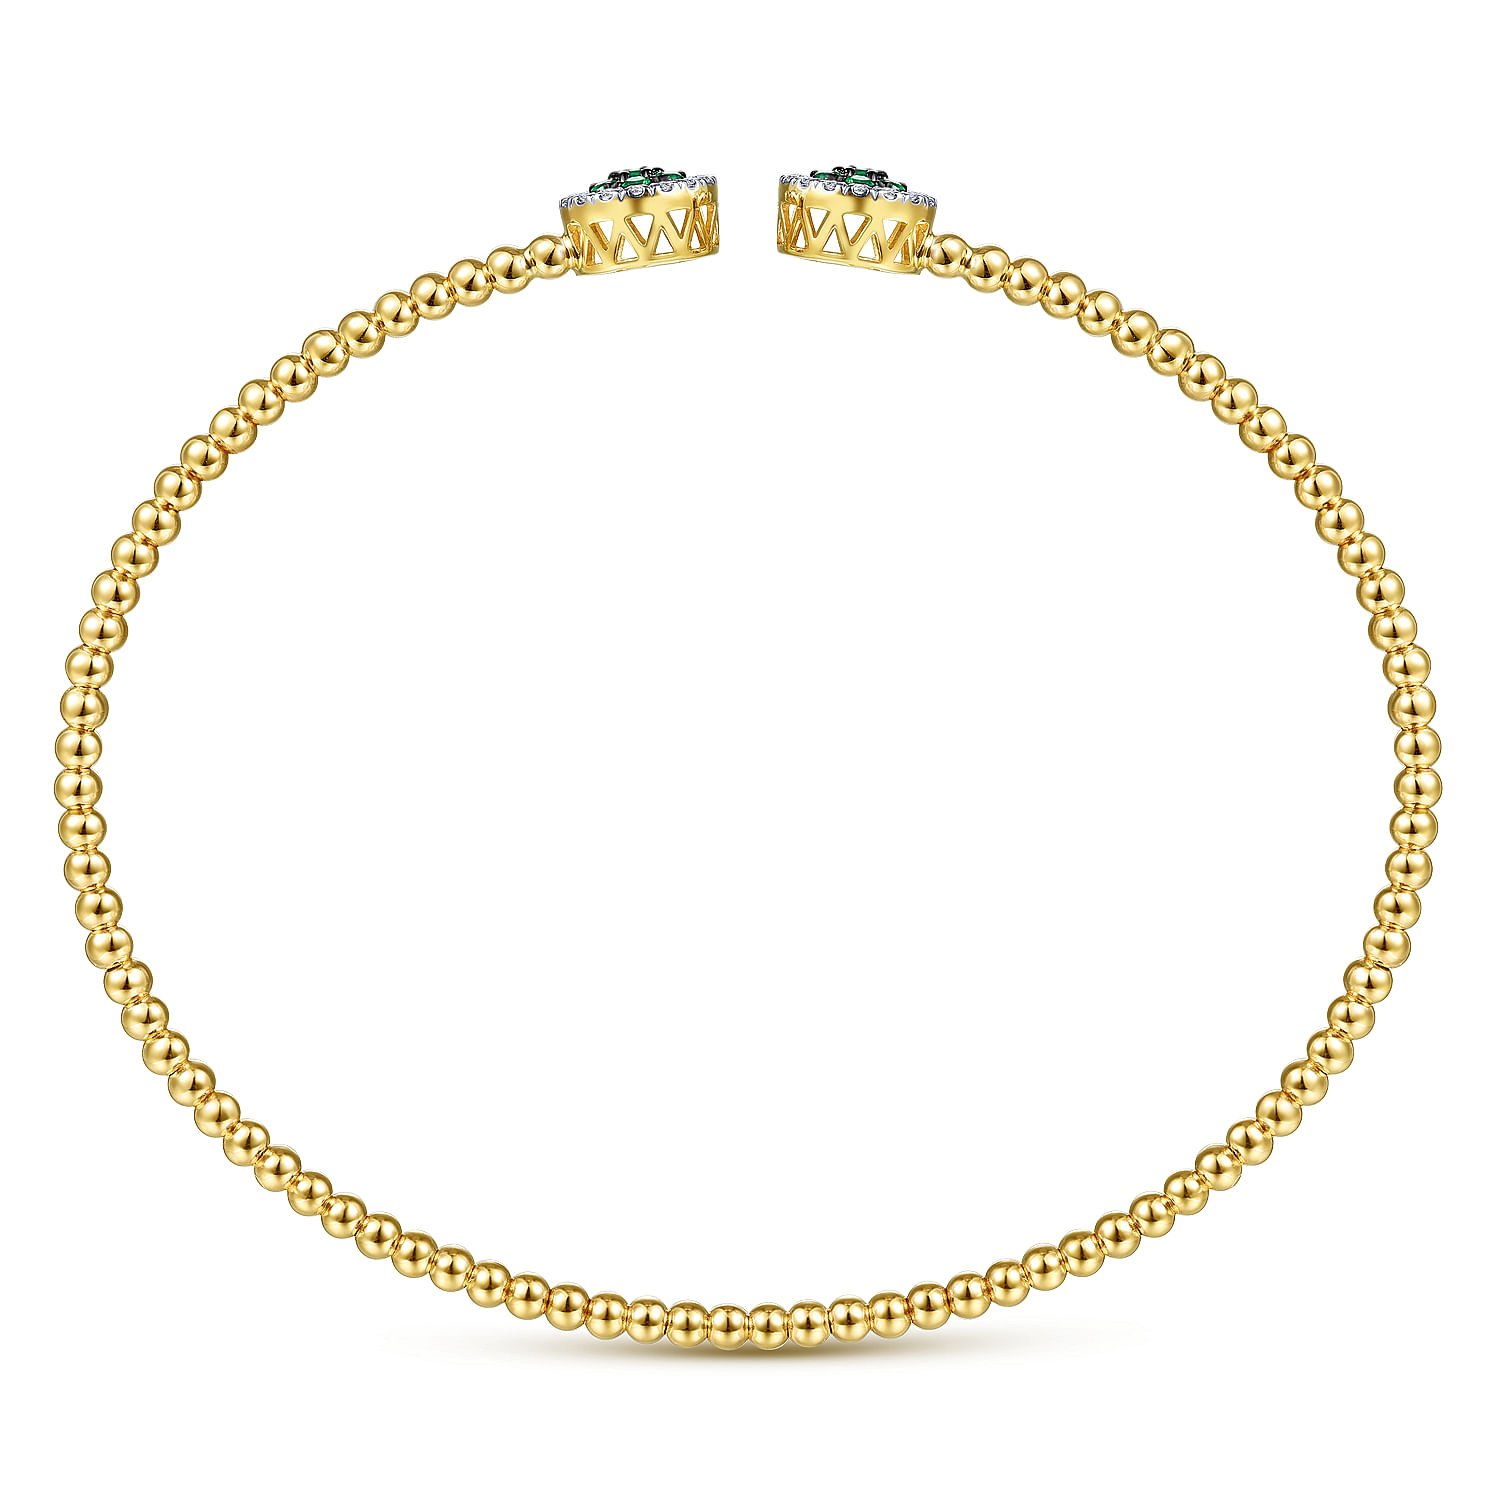 14K Yellow Gold Bujukan Bead Cuff Bracelet with Emerald and Diamond Halo Caps